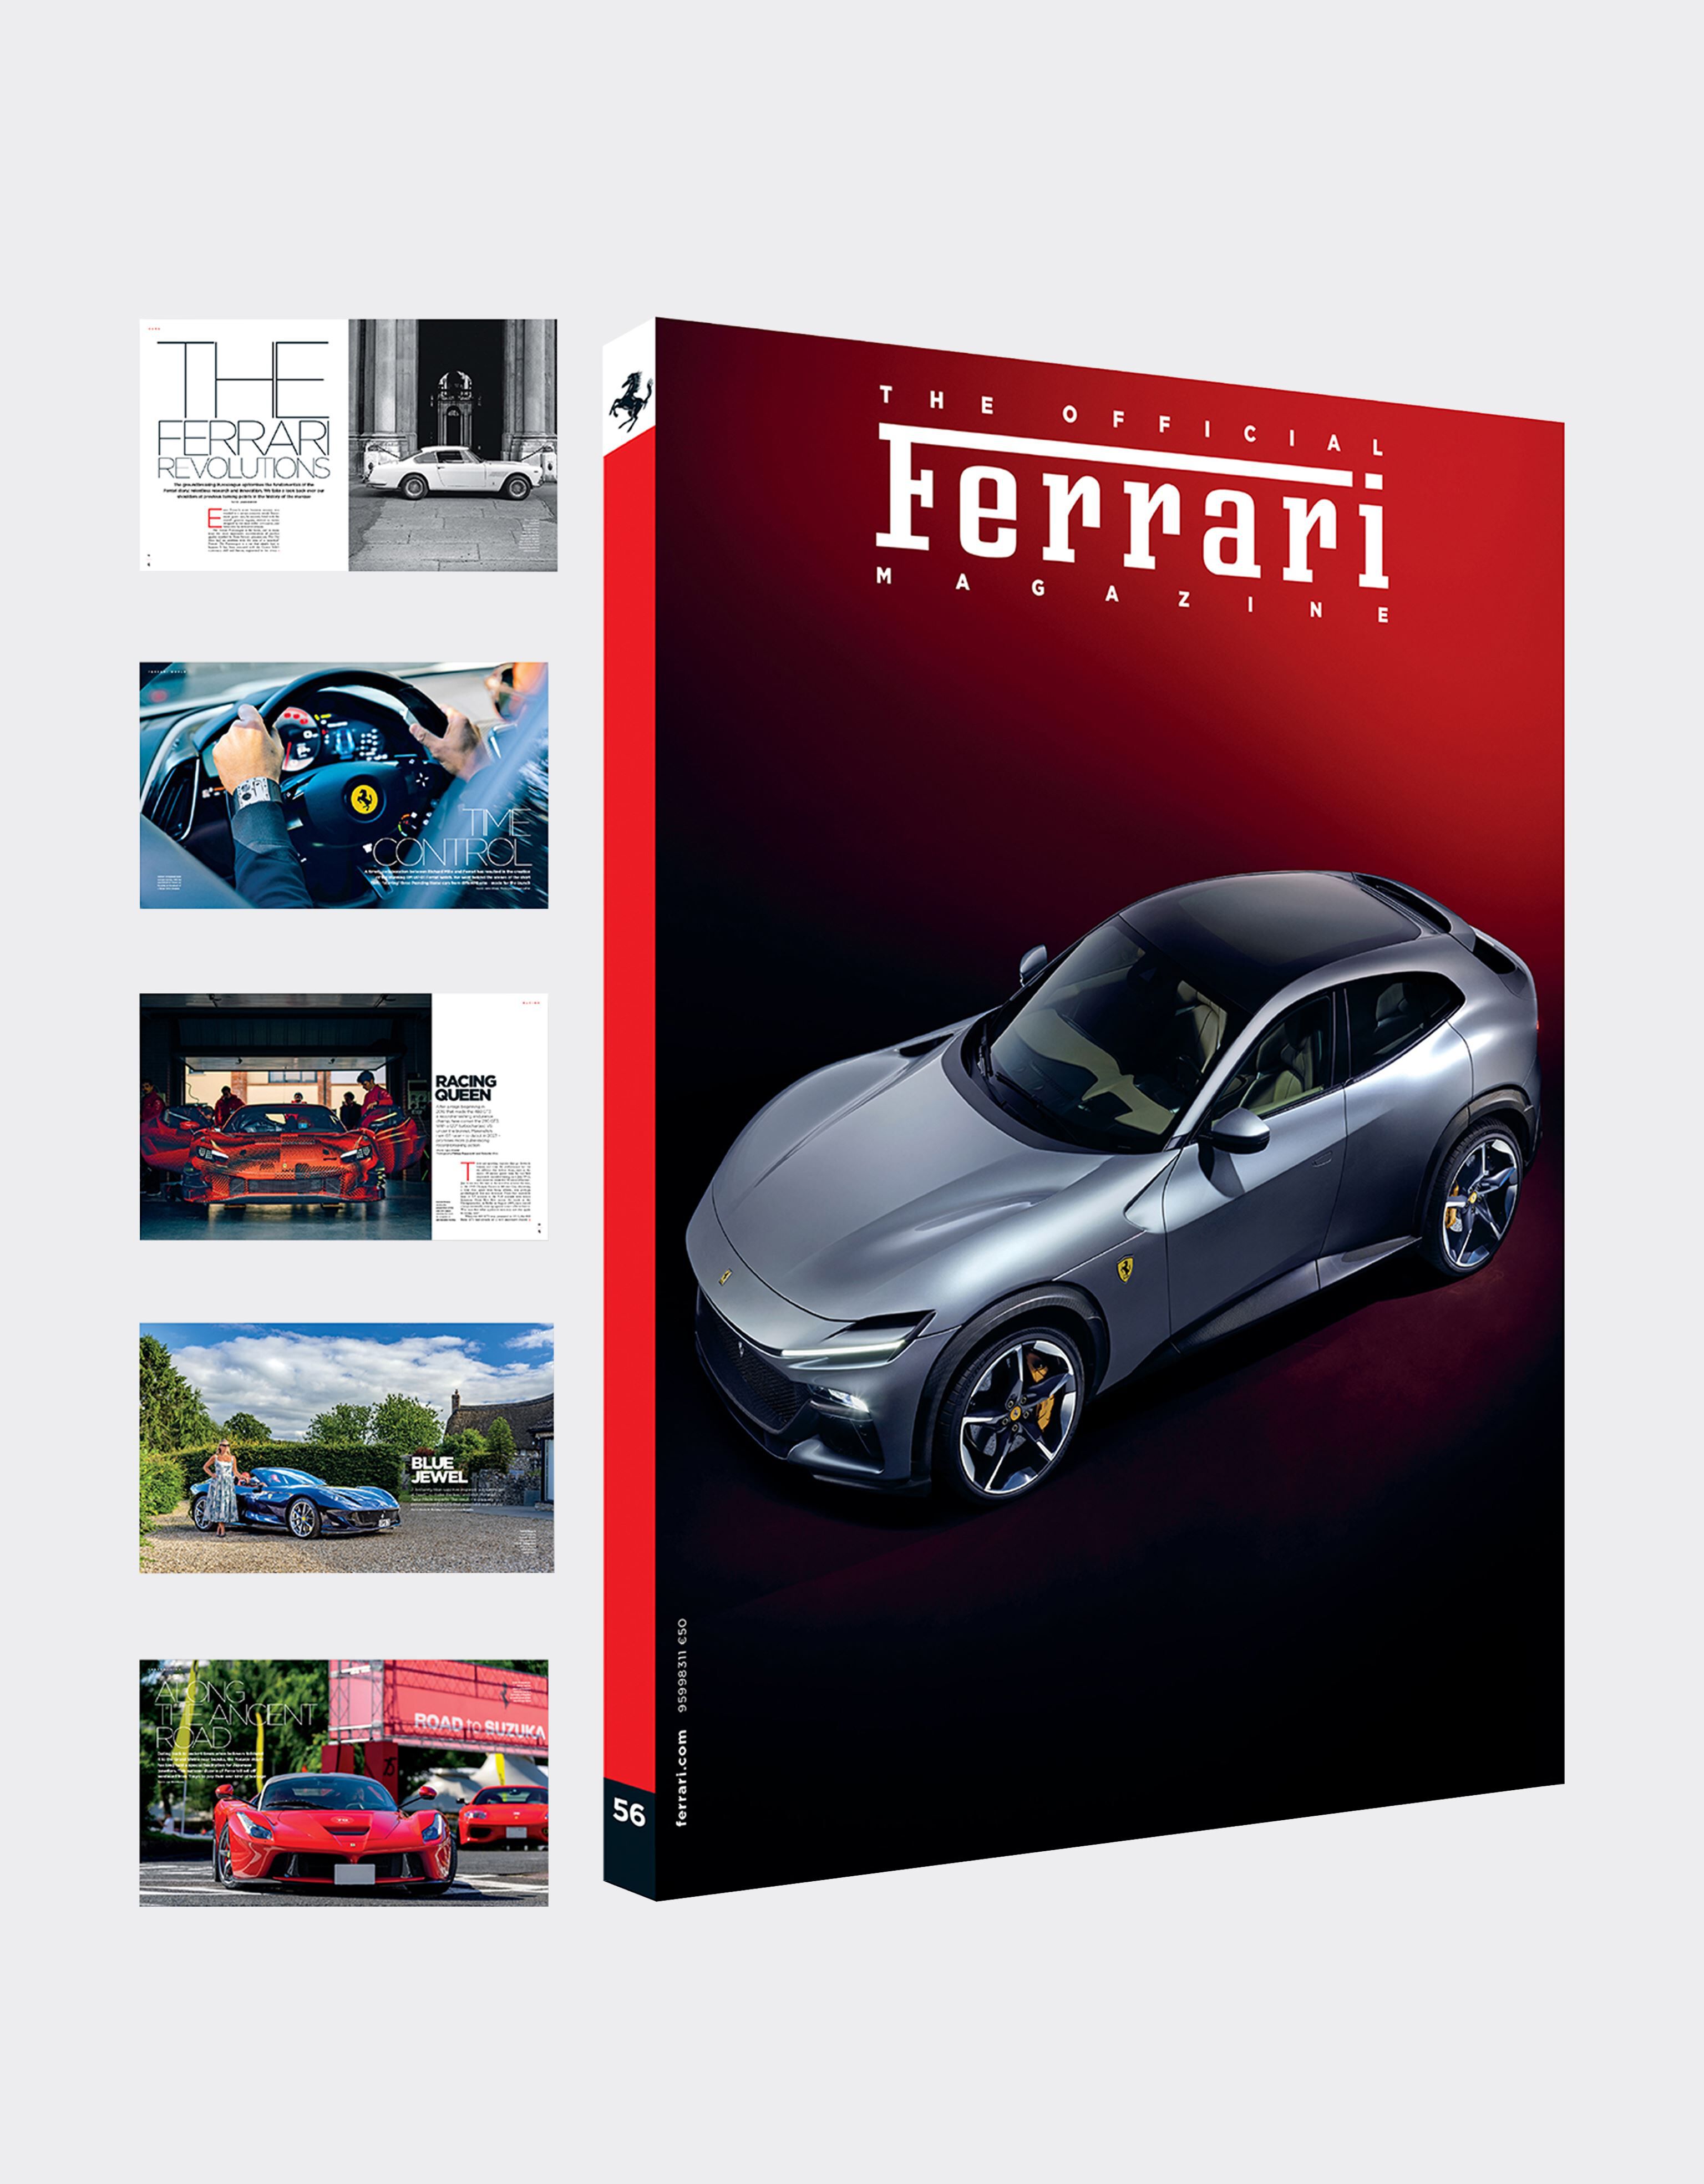 Ferrari The Official Ferrari Magazine Issue 56 黑色 47387f